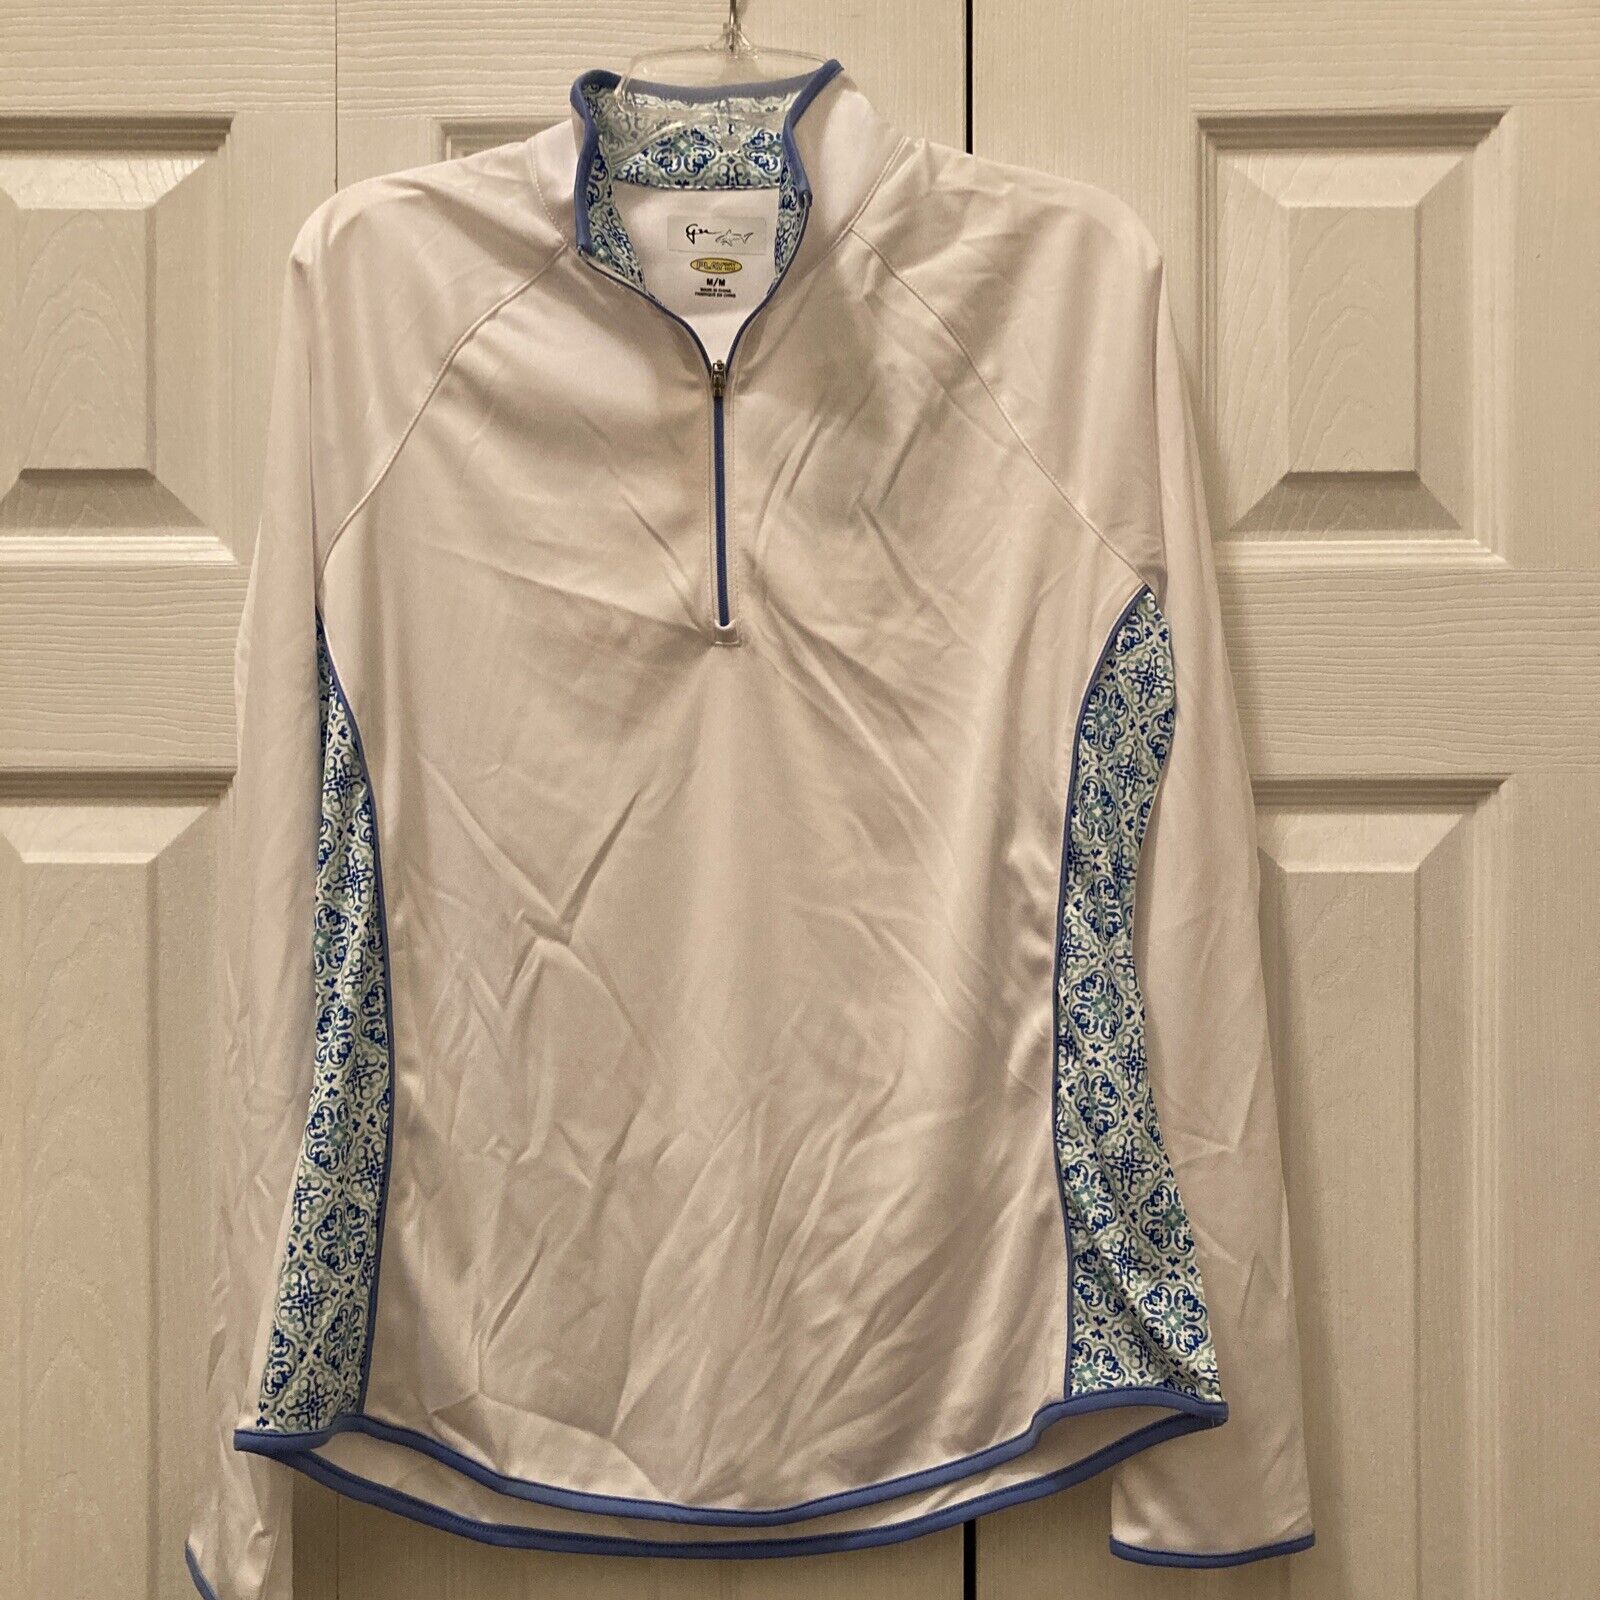 greg norman womens golf shirt long Gree Blue sleeve Popular brand medium White Excellence